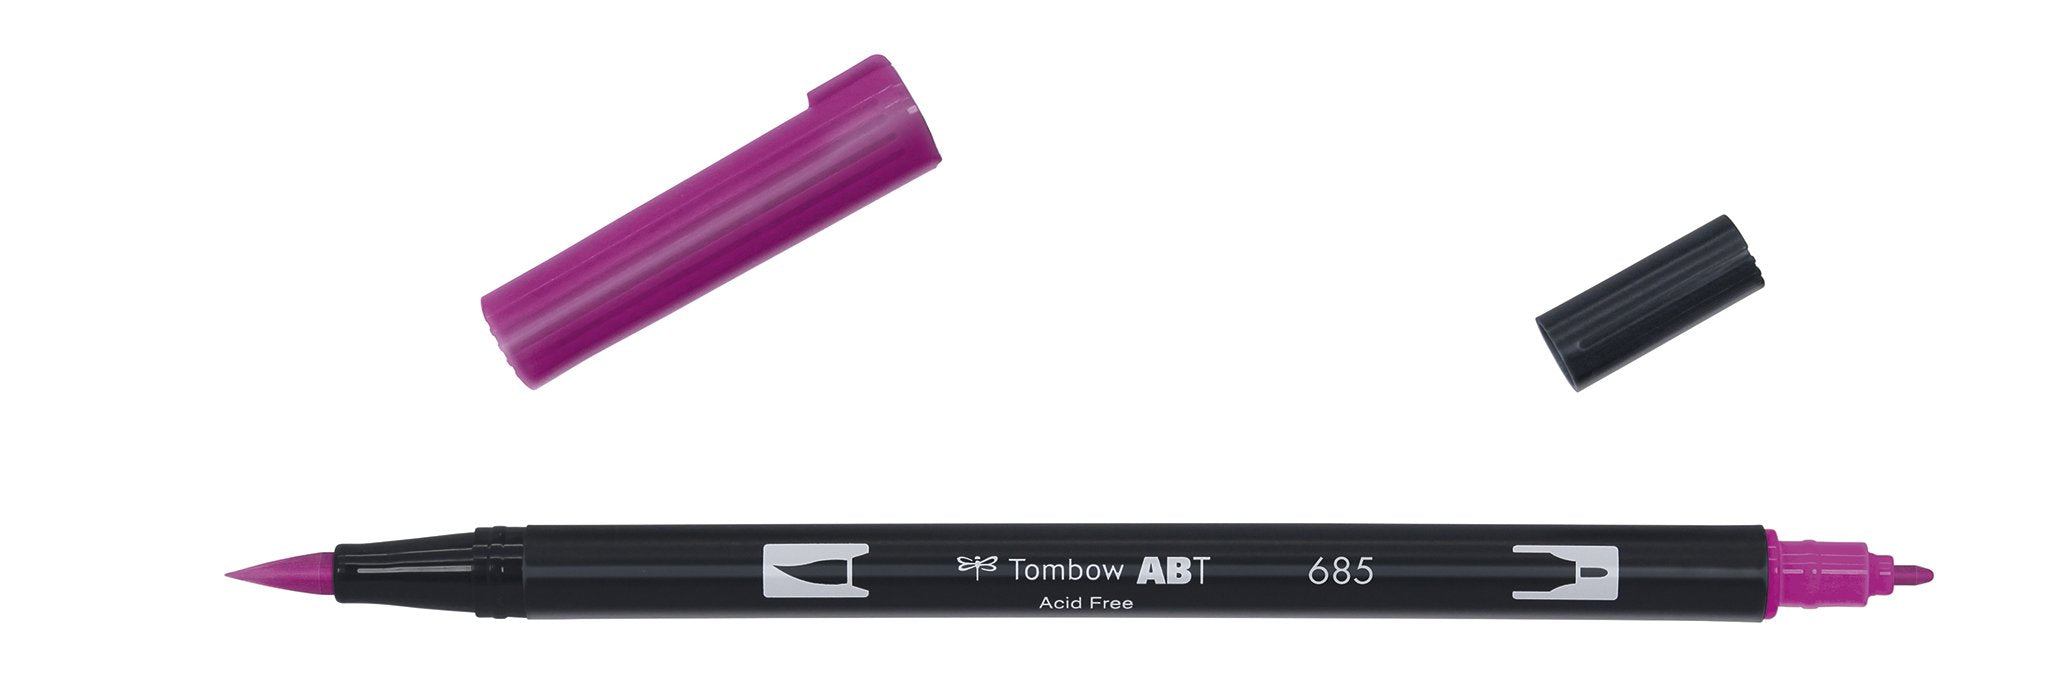 Tombow - ABT-685 Dual Brush Pen - Deepmagenta-Stift-DutchMills